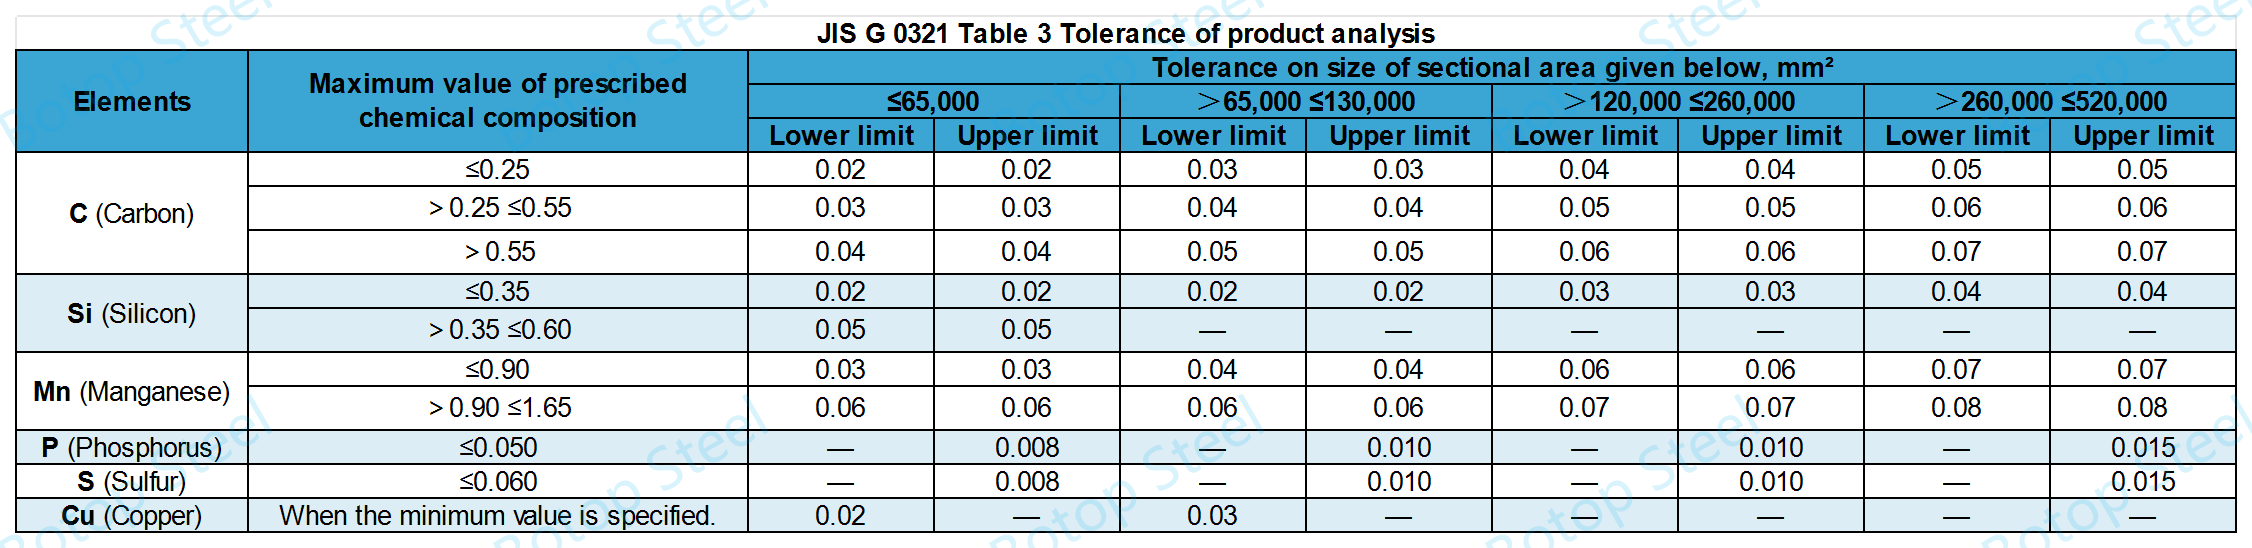 JIS G 0321 Table 3 Tolerance of product analysis